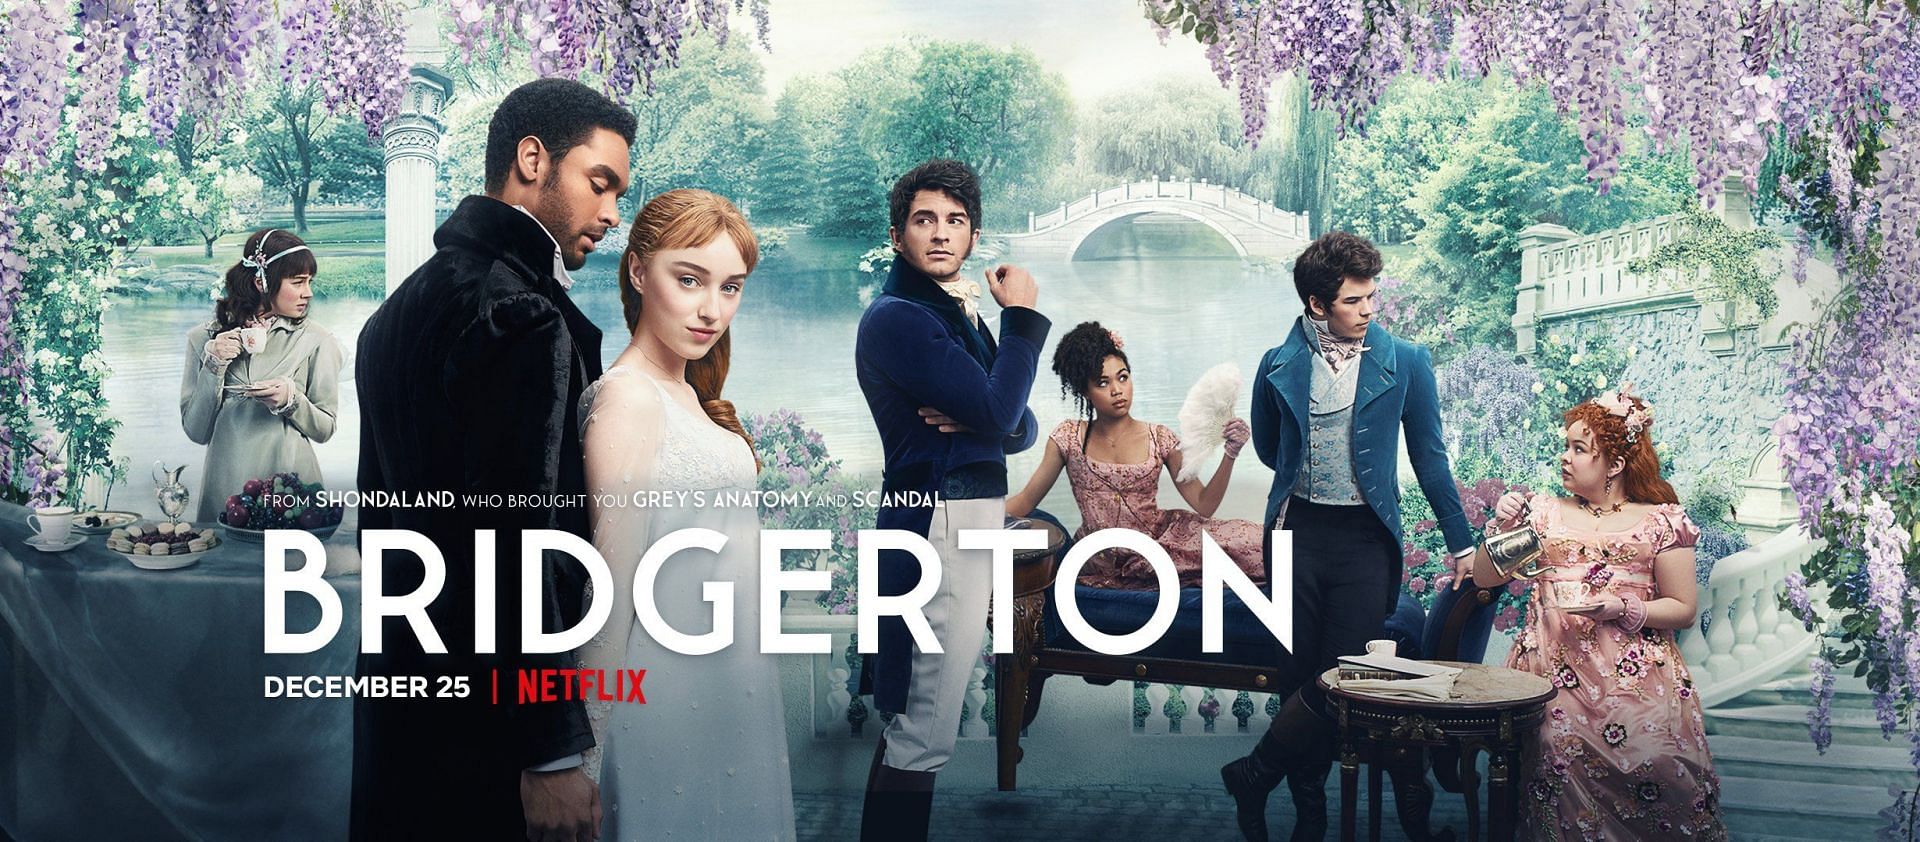 Bridgerton (Image via Netflix)